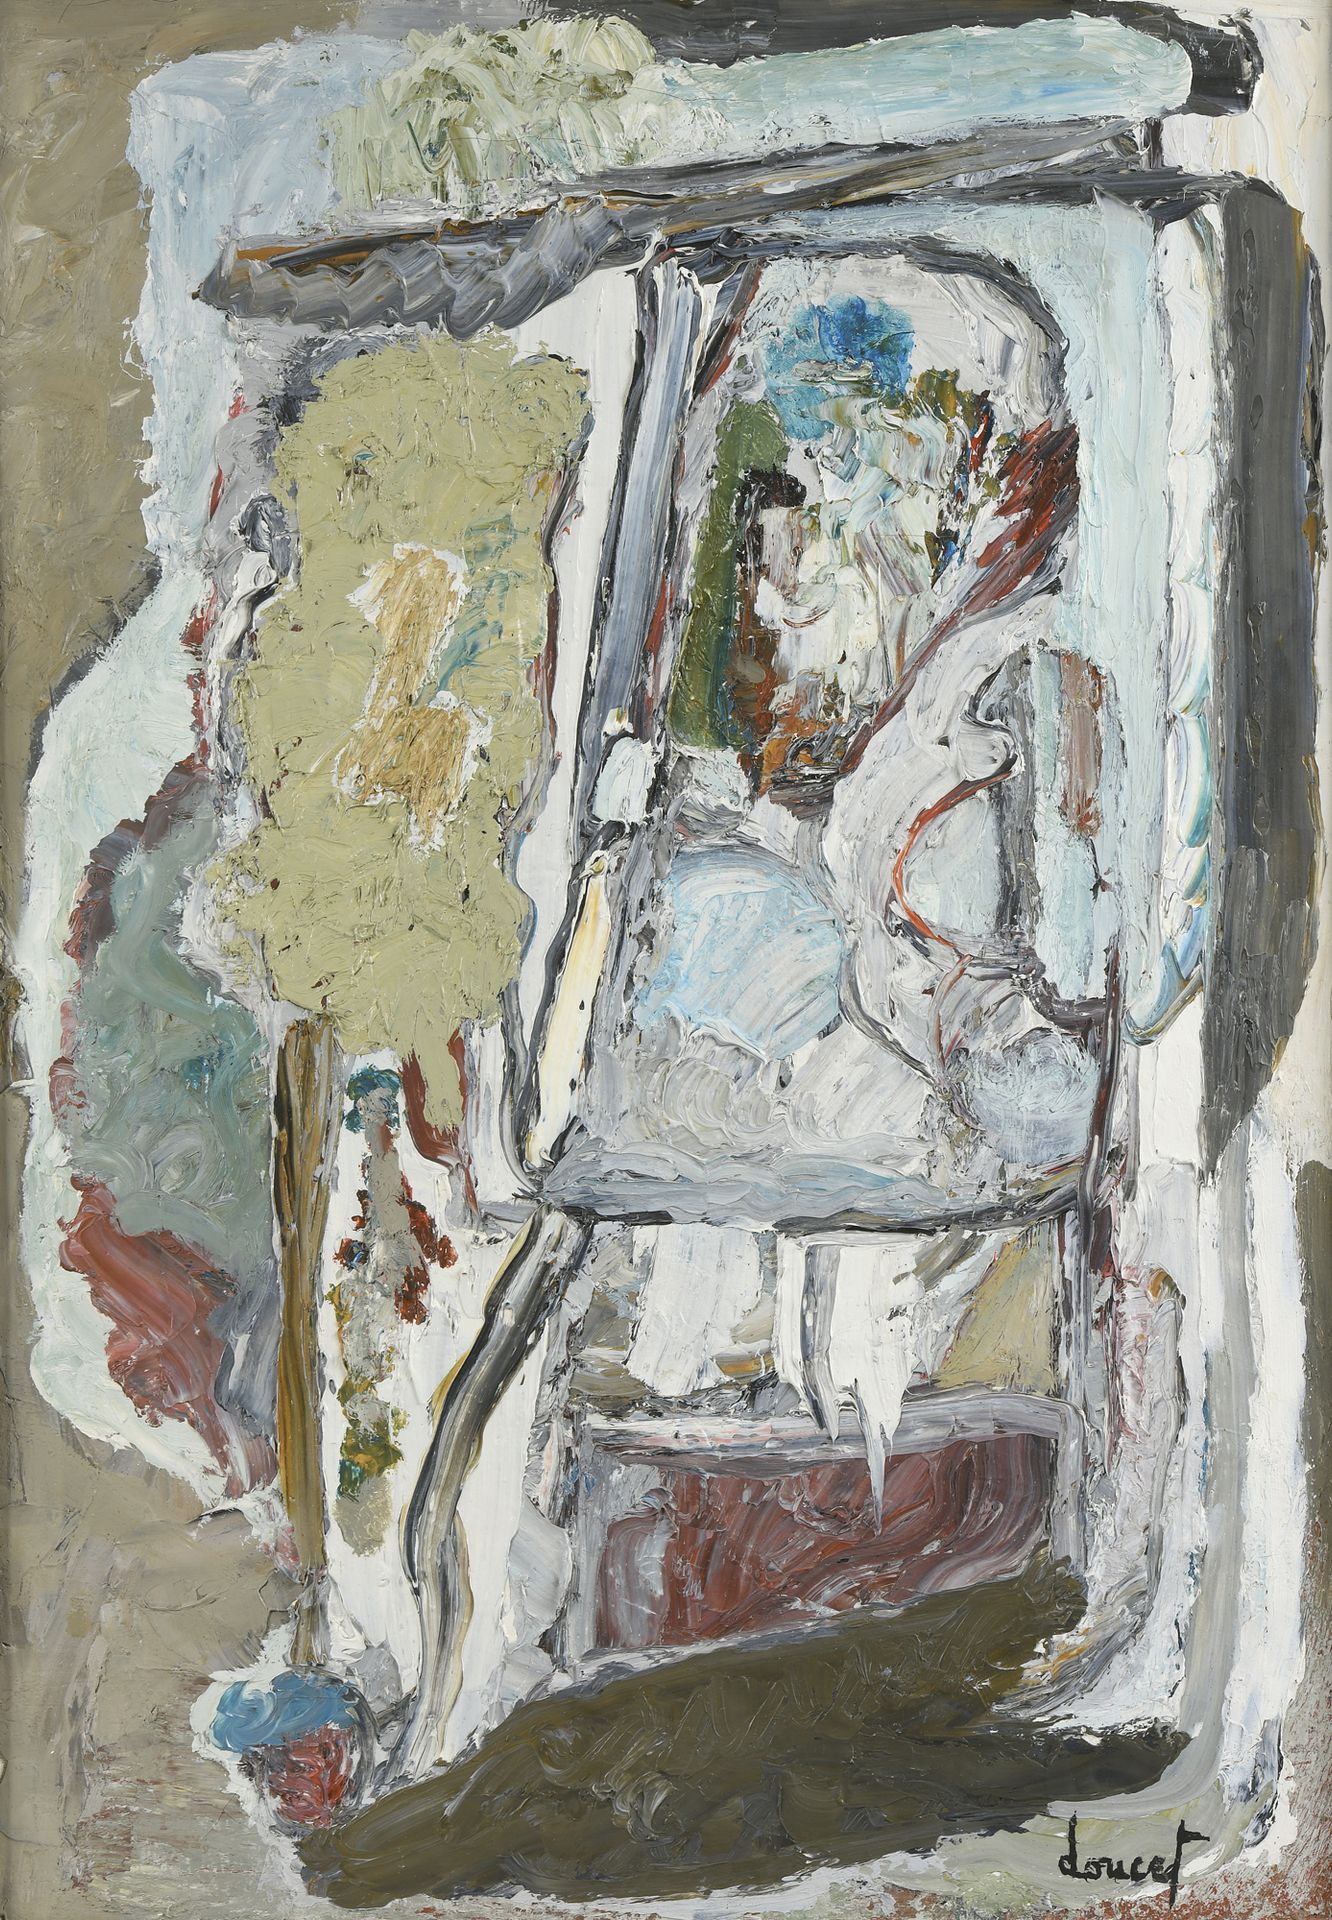 Null Jacques DOUCET (1924-1994)

无题》，1966年

布面油画。

右下方有签名。

64 x 44 厘米